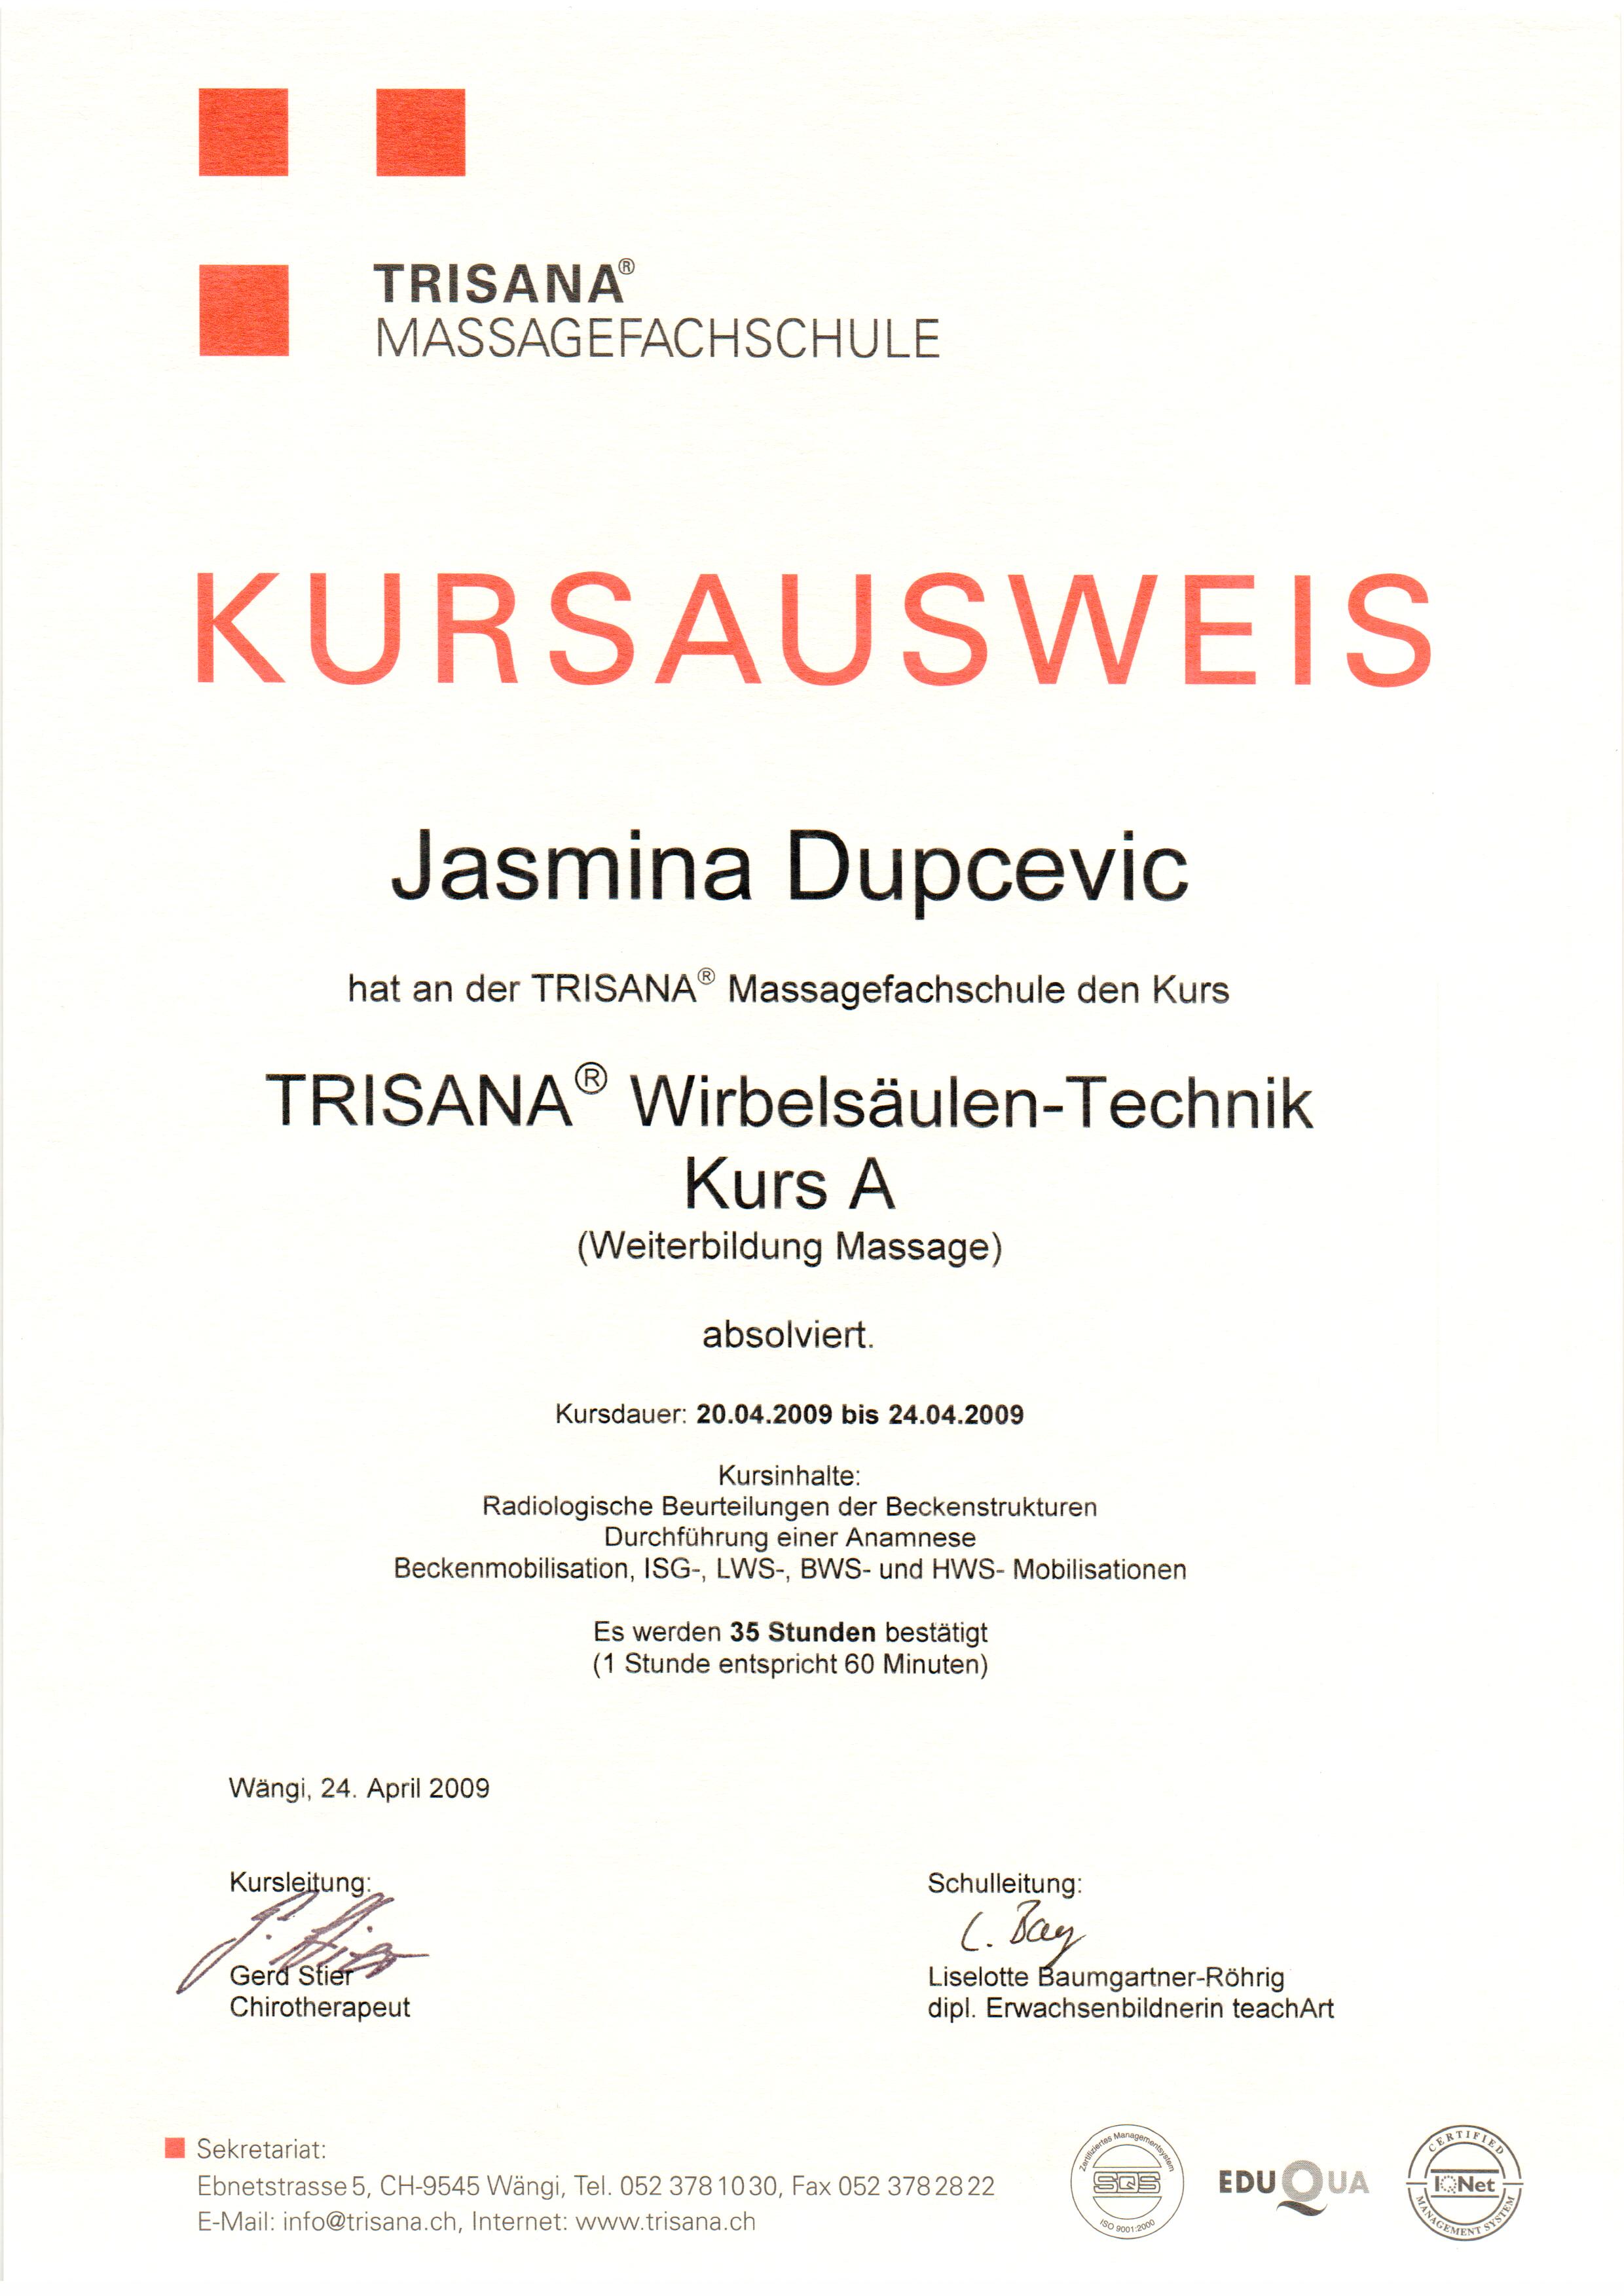 TRISANA© Wirbelsäulen-Technik Kurs A